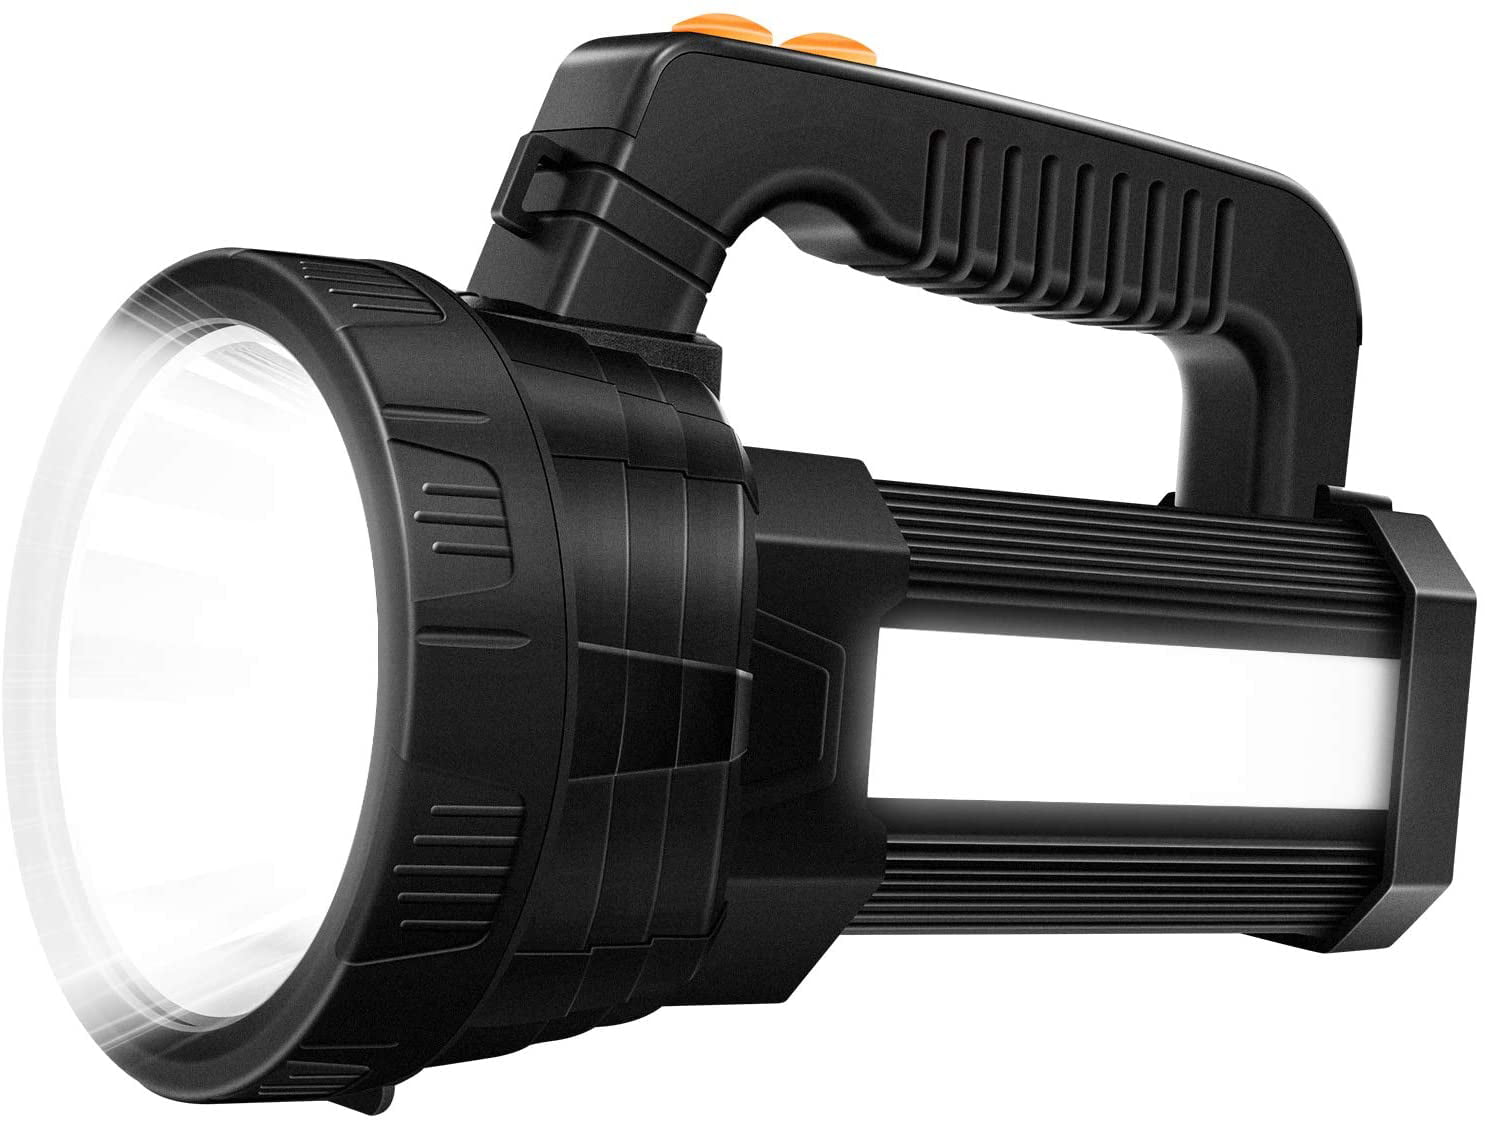 Super Bright Led Handheld Spotlight, What Is The Brightest Led Flashlight Bulb